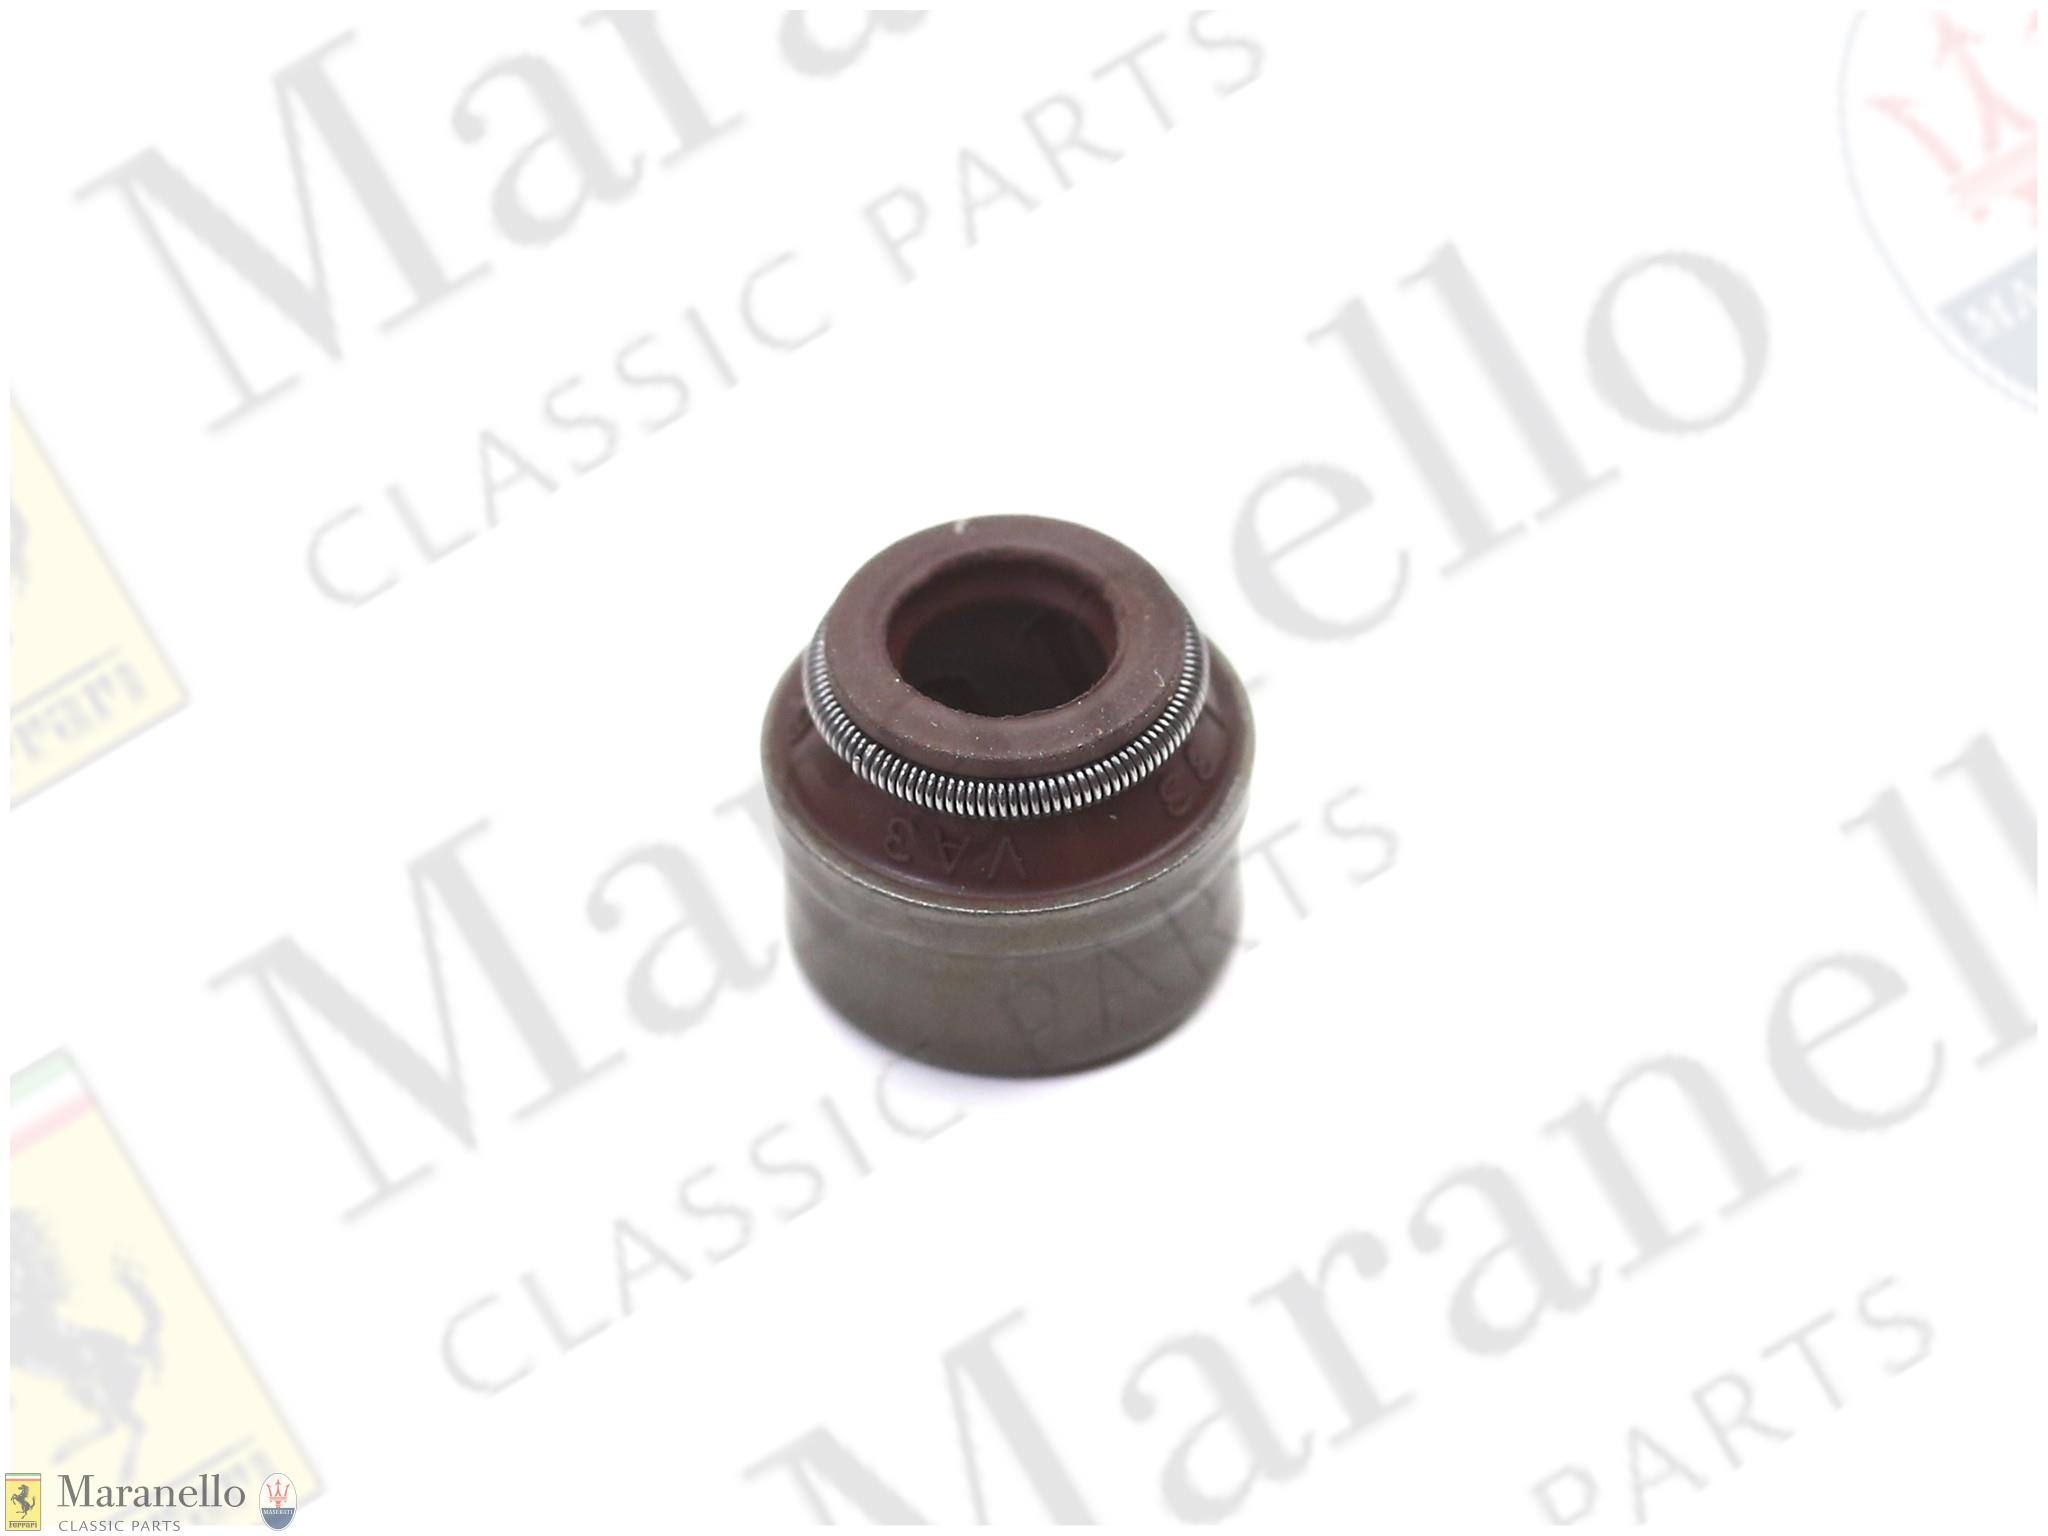 Ferrari Part 221473 Valve Stem Oil Seal Maranello Classic Parts 6836